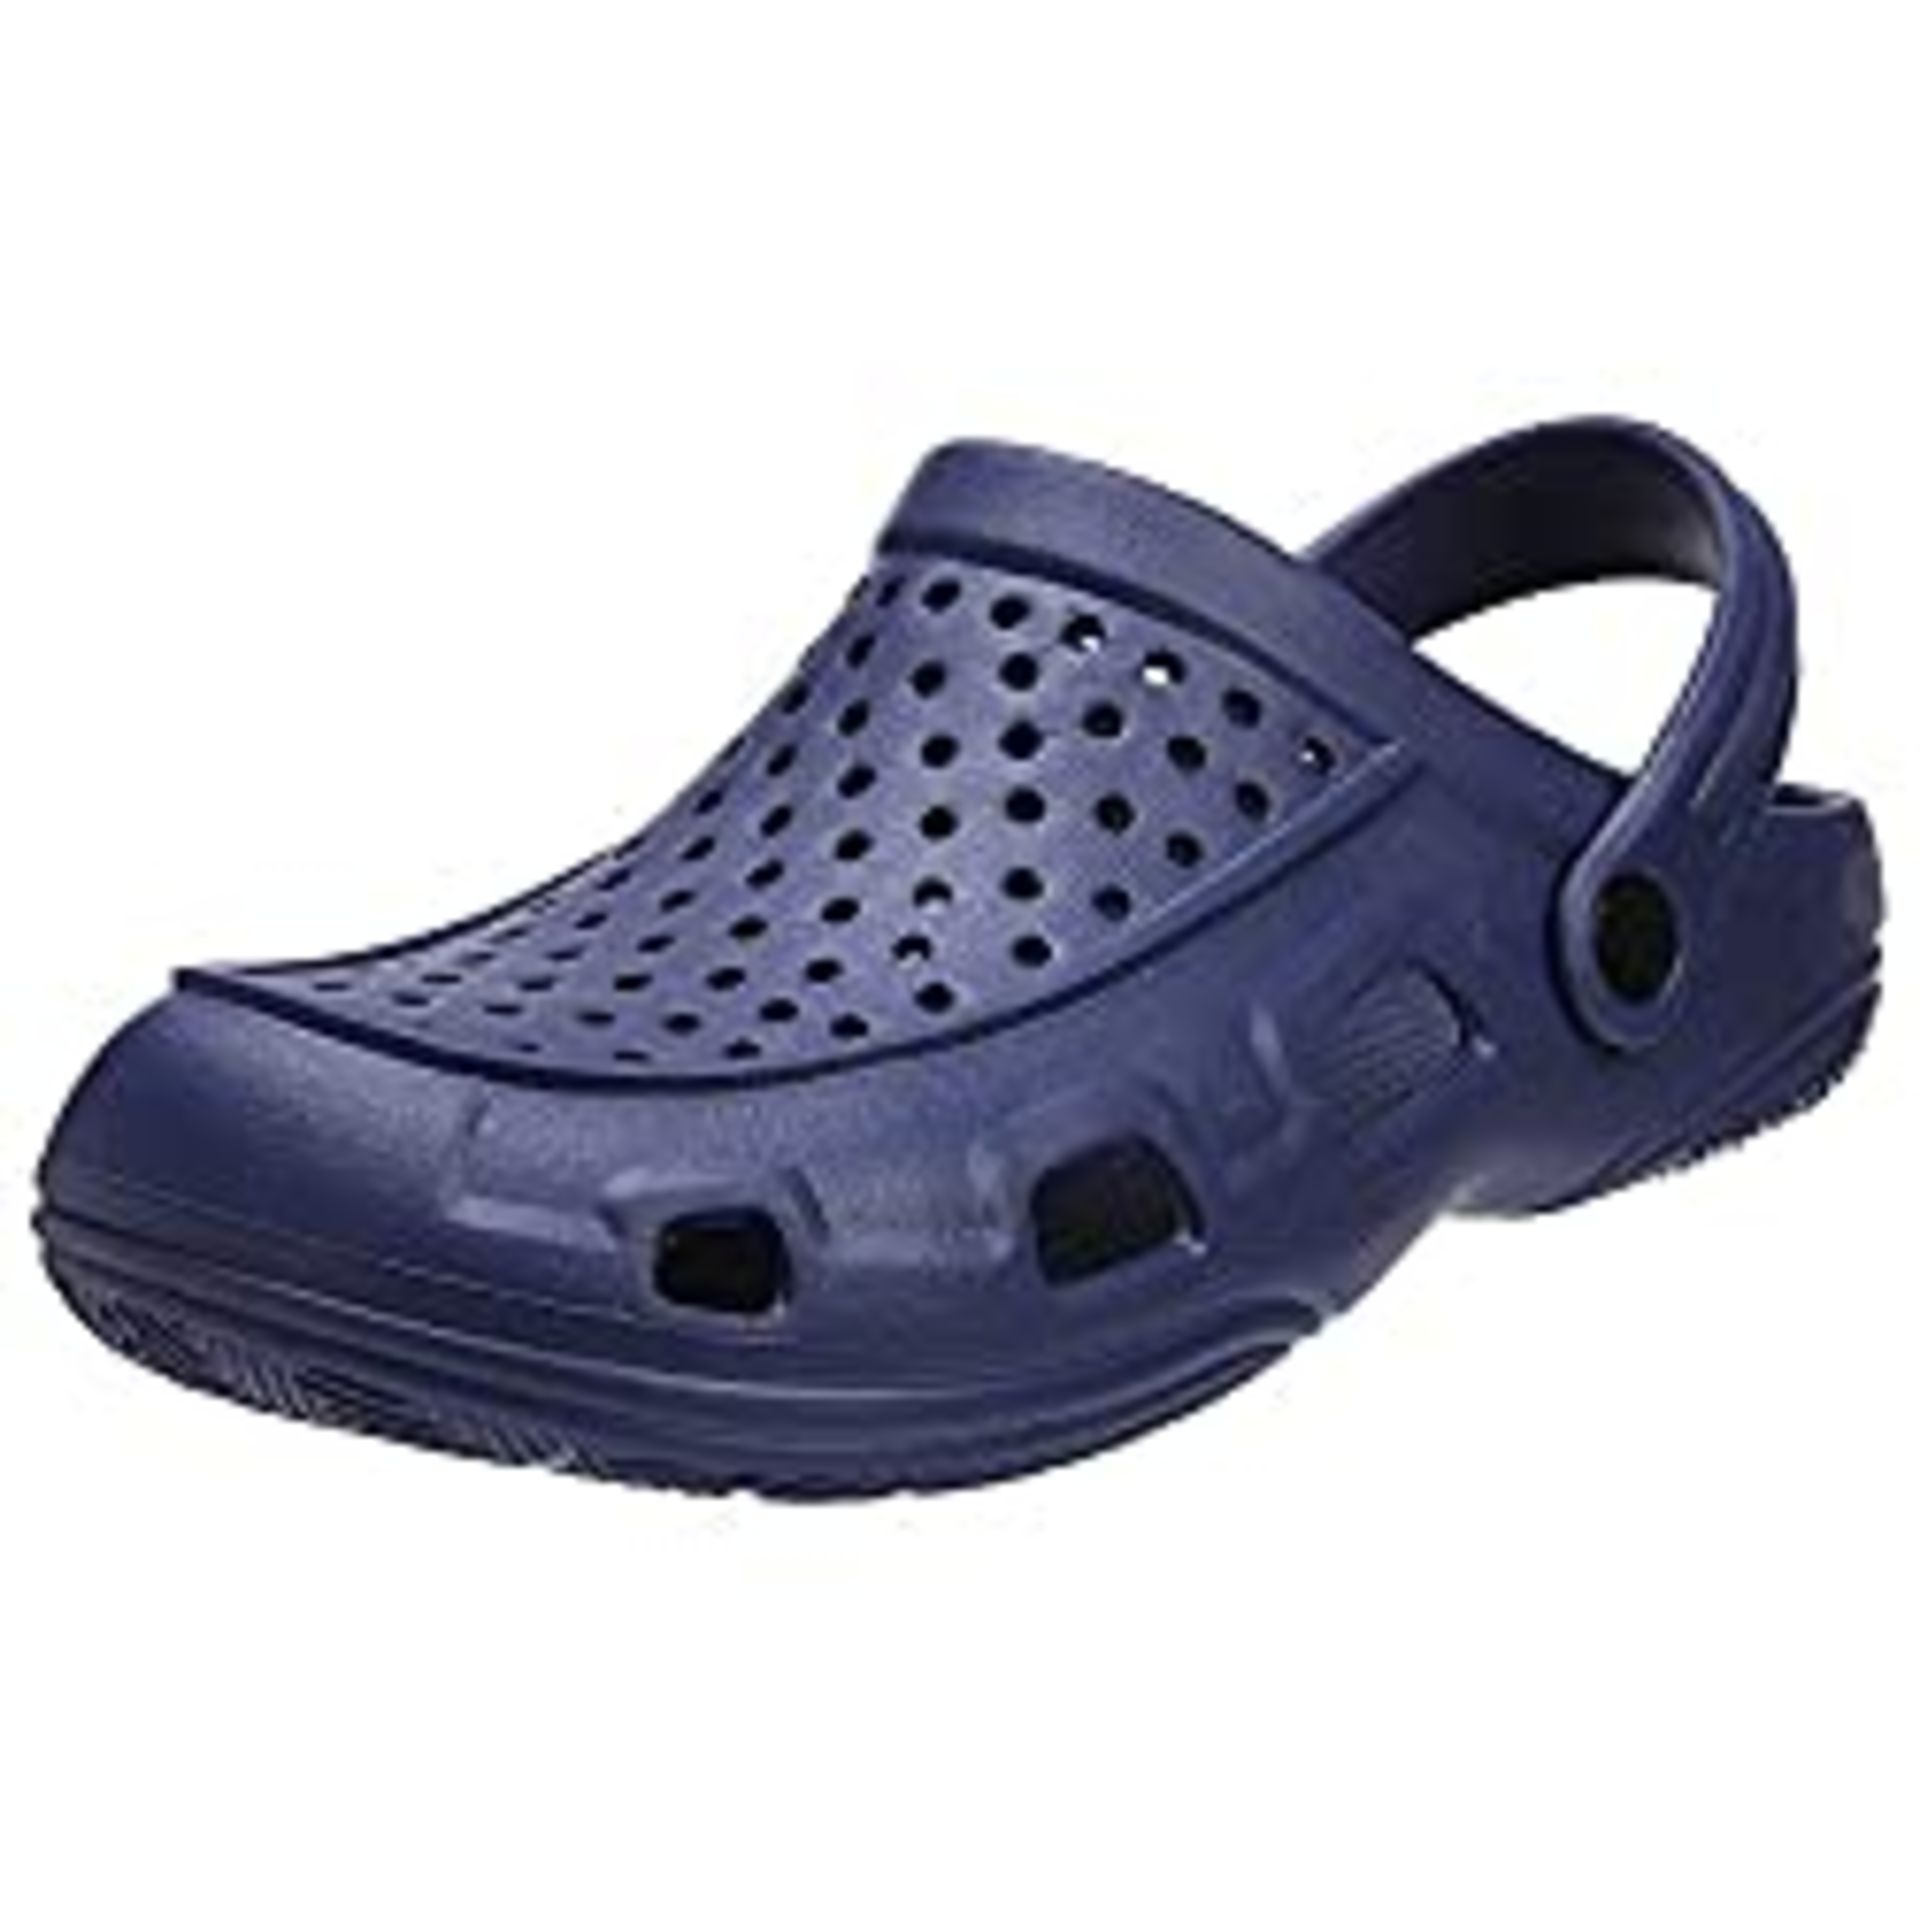 RRP £13.99 Beslip Garden Clogs Shoes Summer Sandals Slippers for Women, Navy 8-8.5